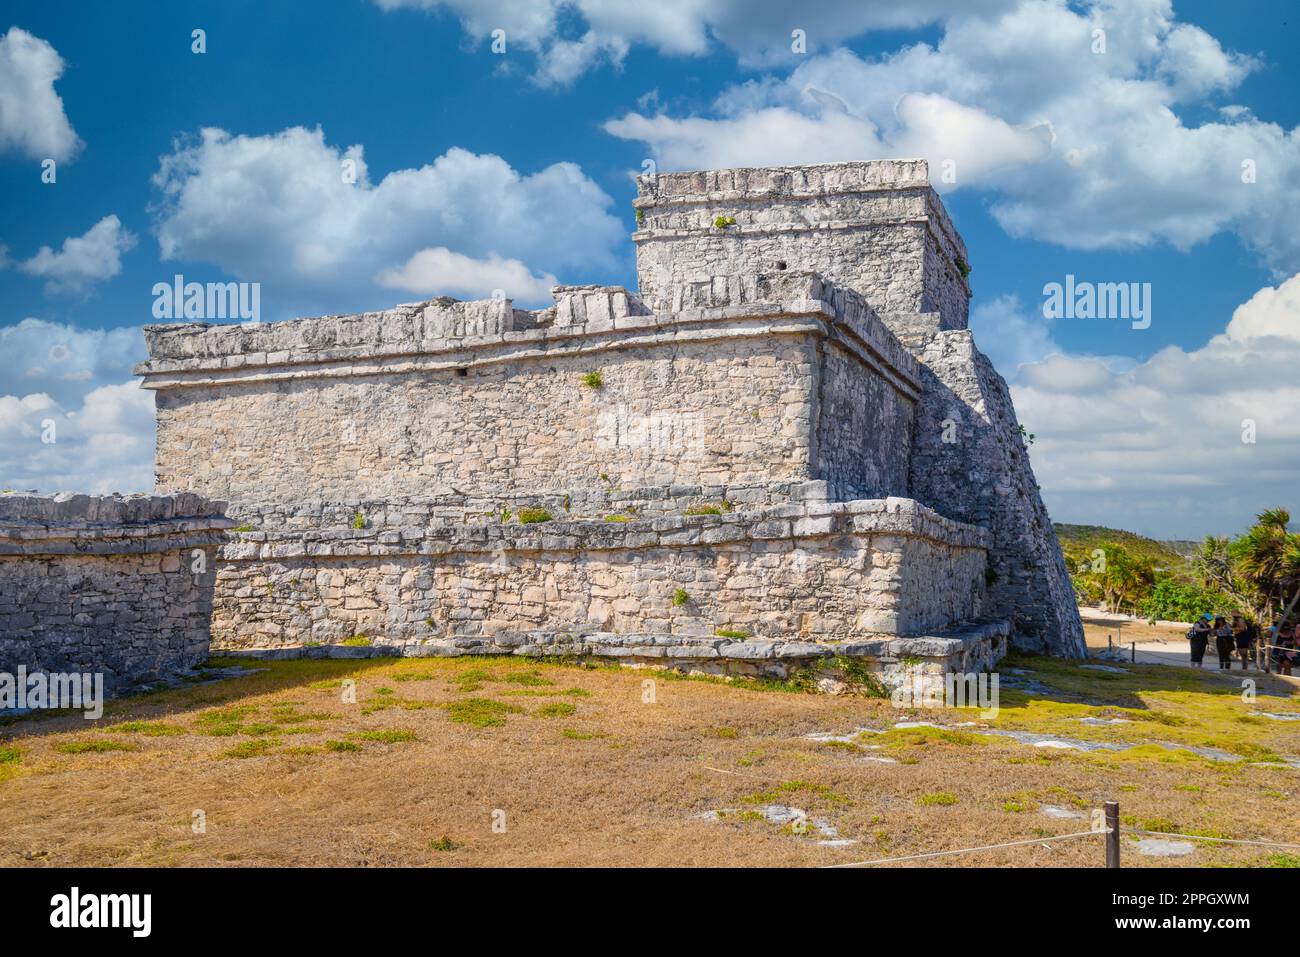 Das Schloss, Maya-Ruinen in Tulum, Riviera Maya, Yucatan, Karibisches Meer Mexiko Stockfoto